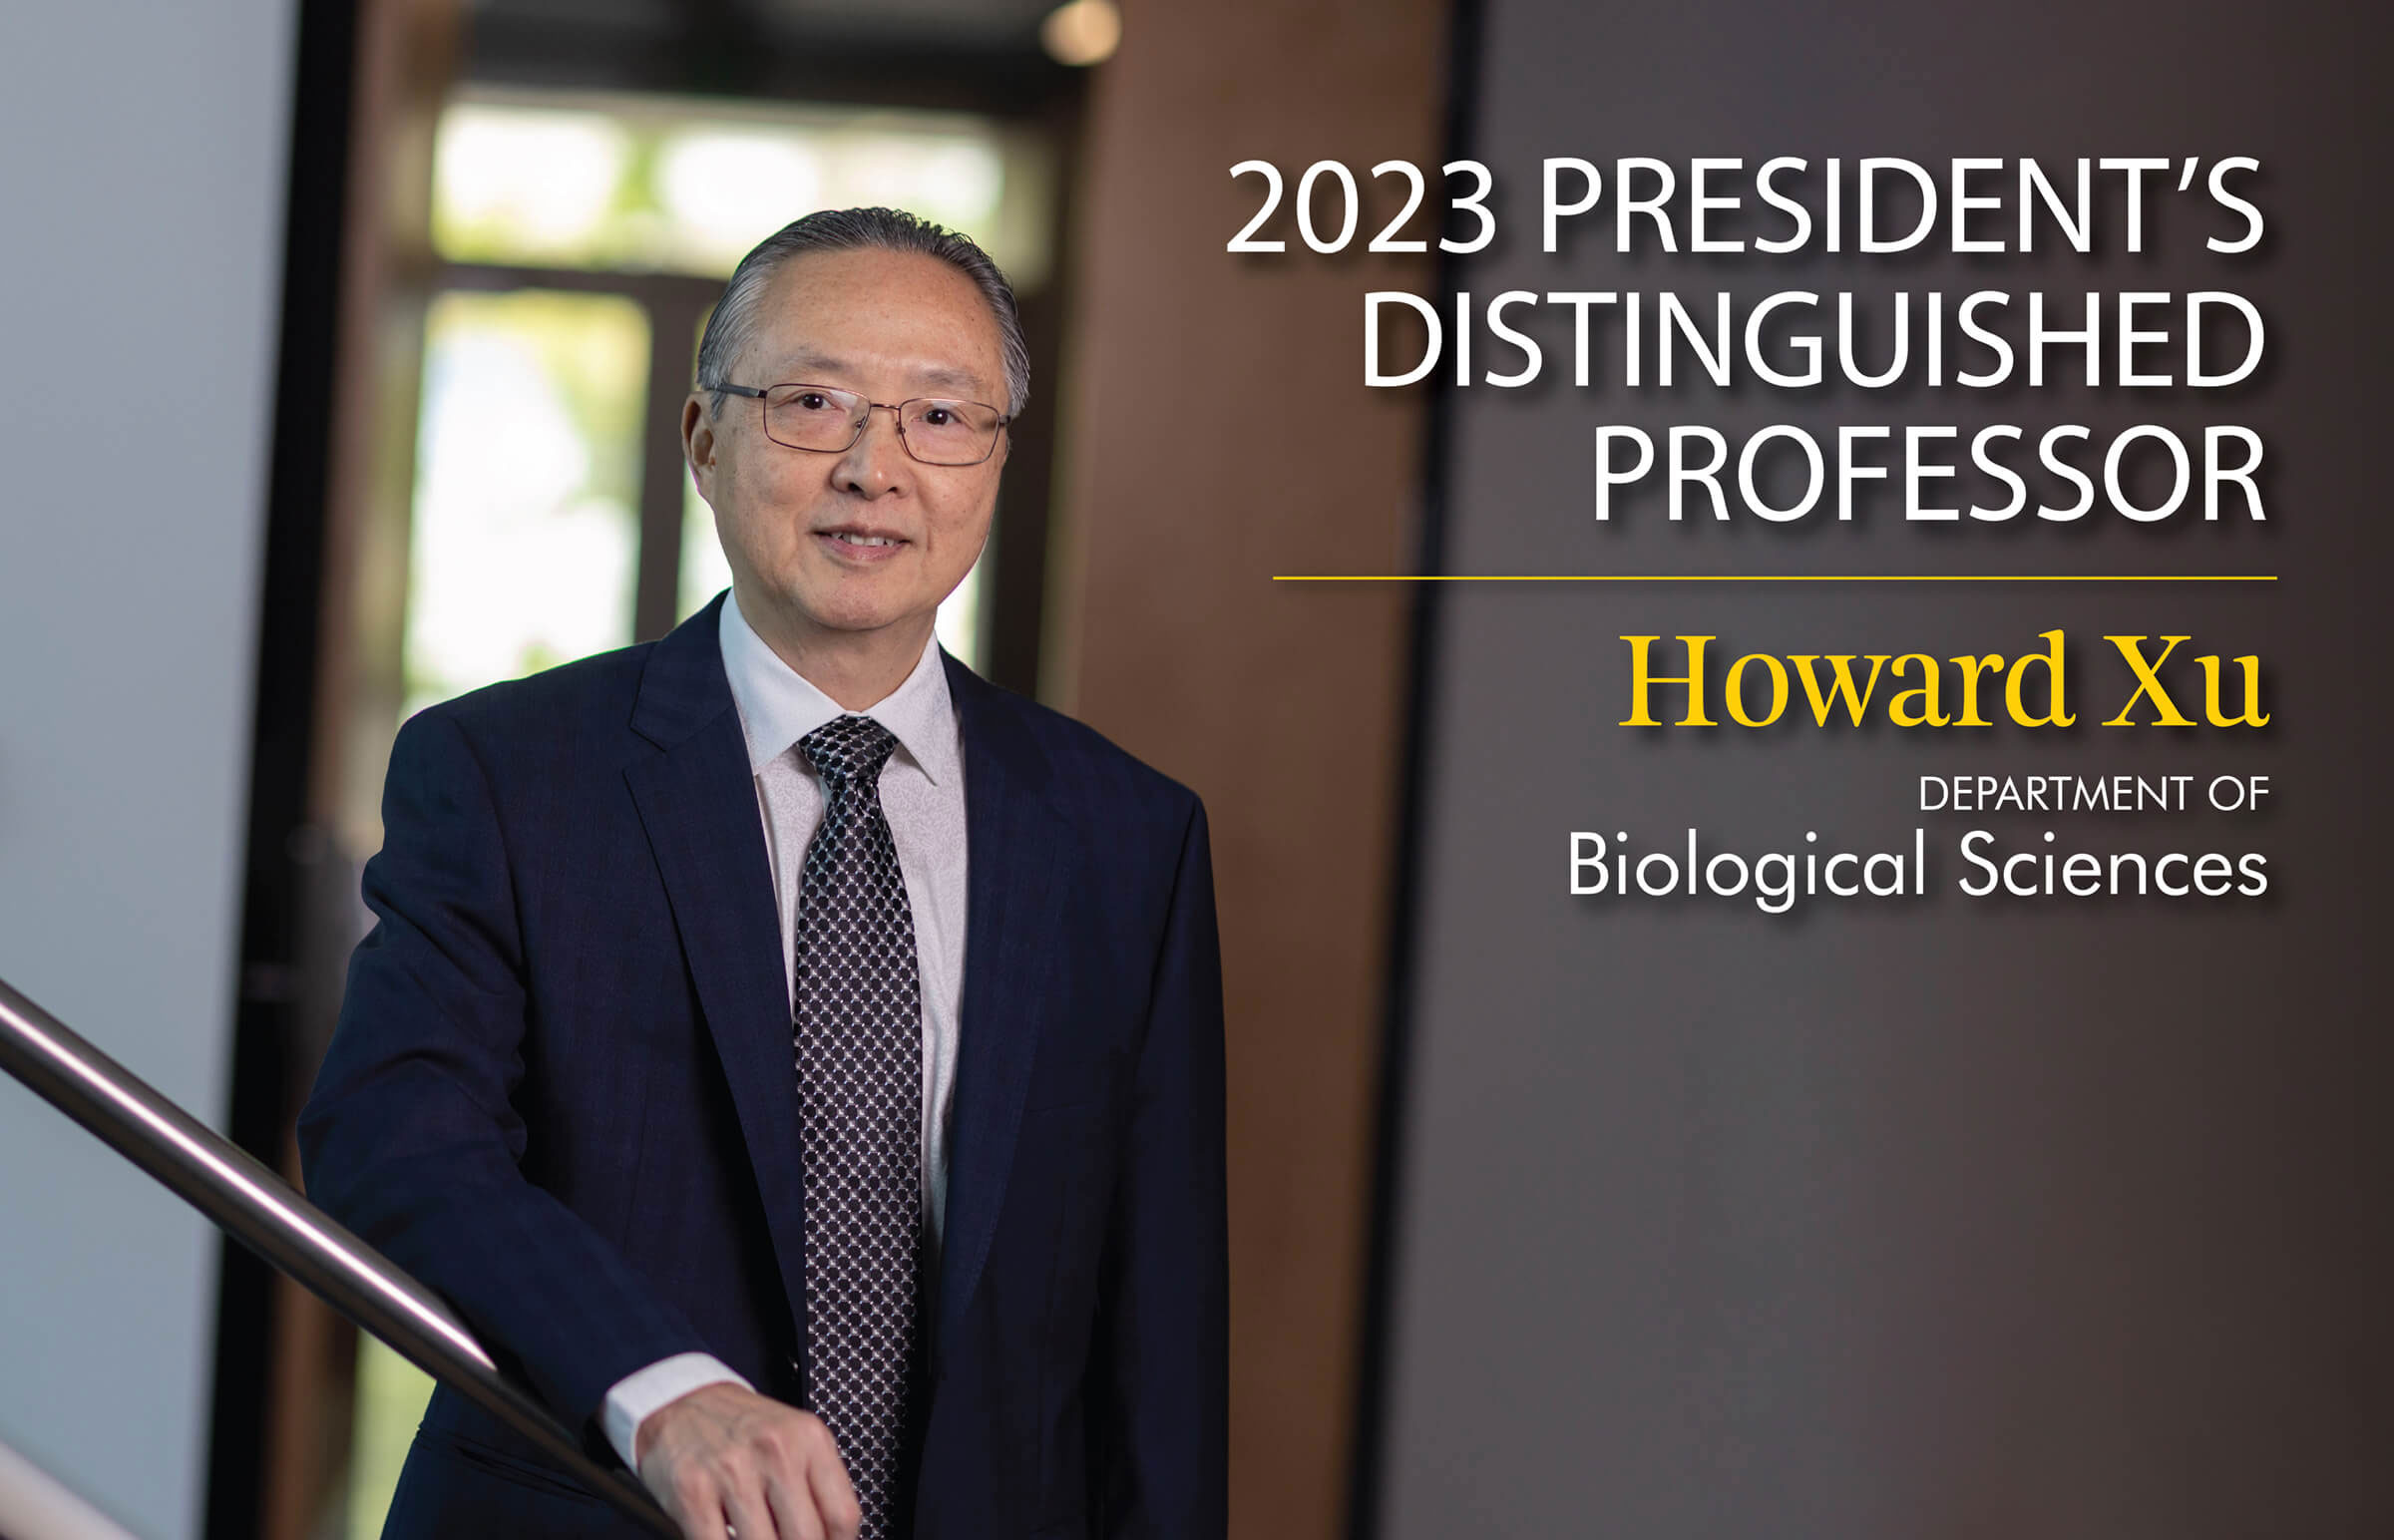 2023 President's Distinguished Professor, Howard Xu, Department of Biological Sciences